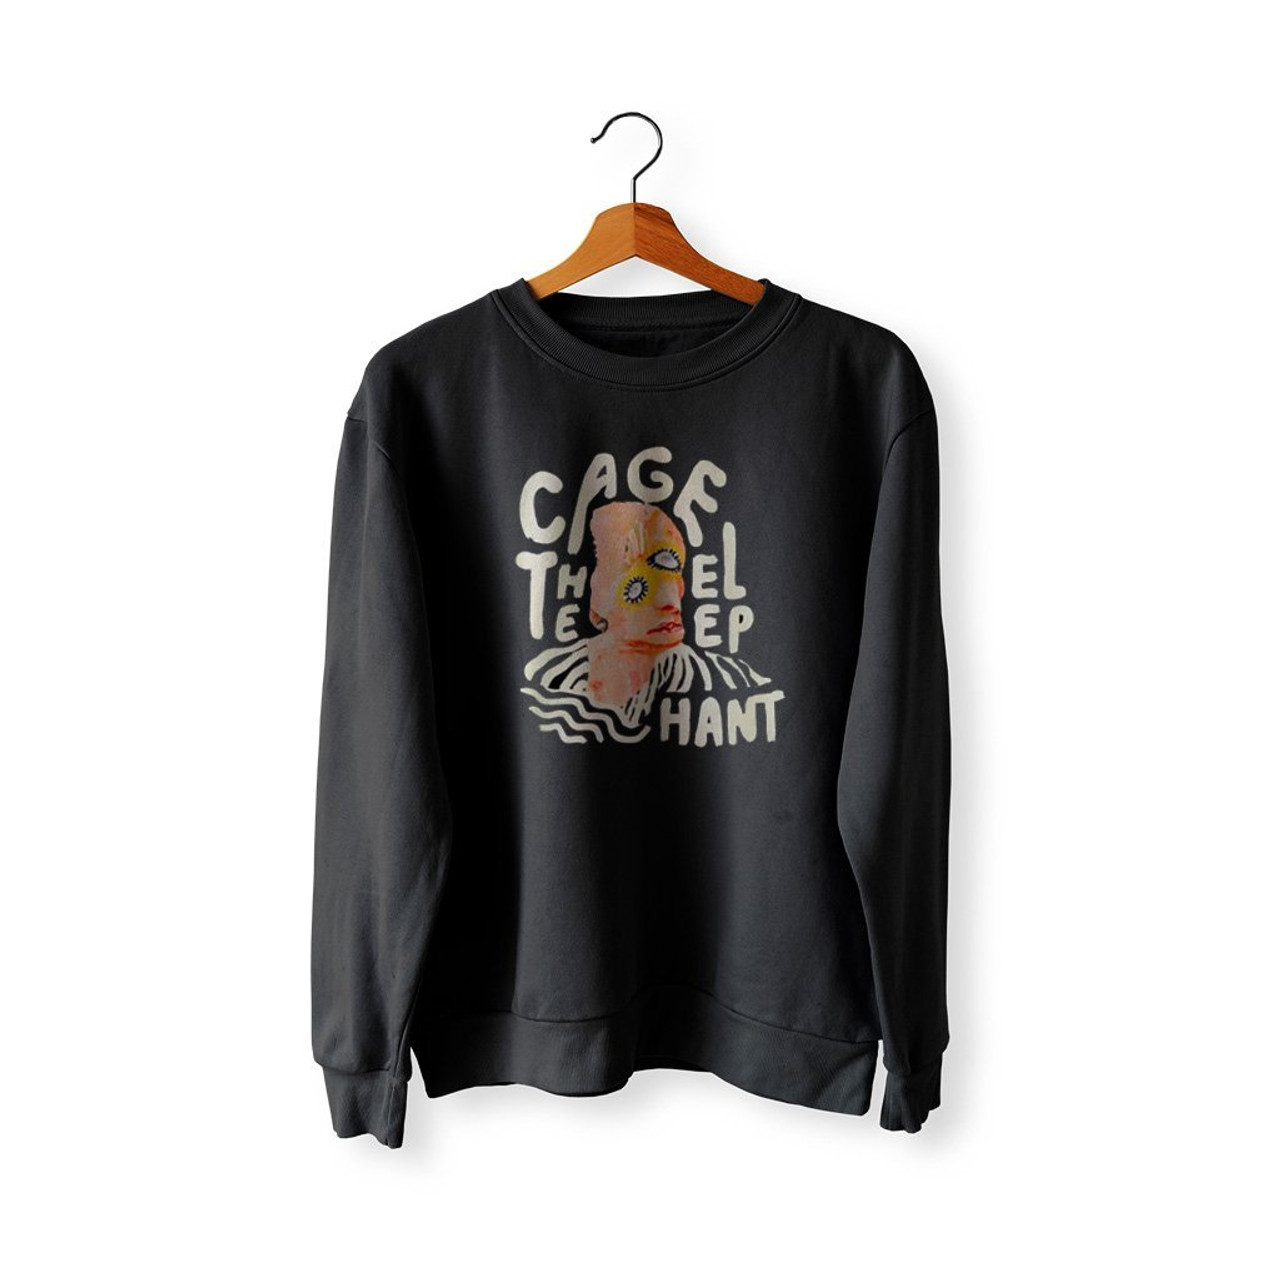 Cage The Elephant Band Melophobia Sweatshirt Sweater